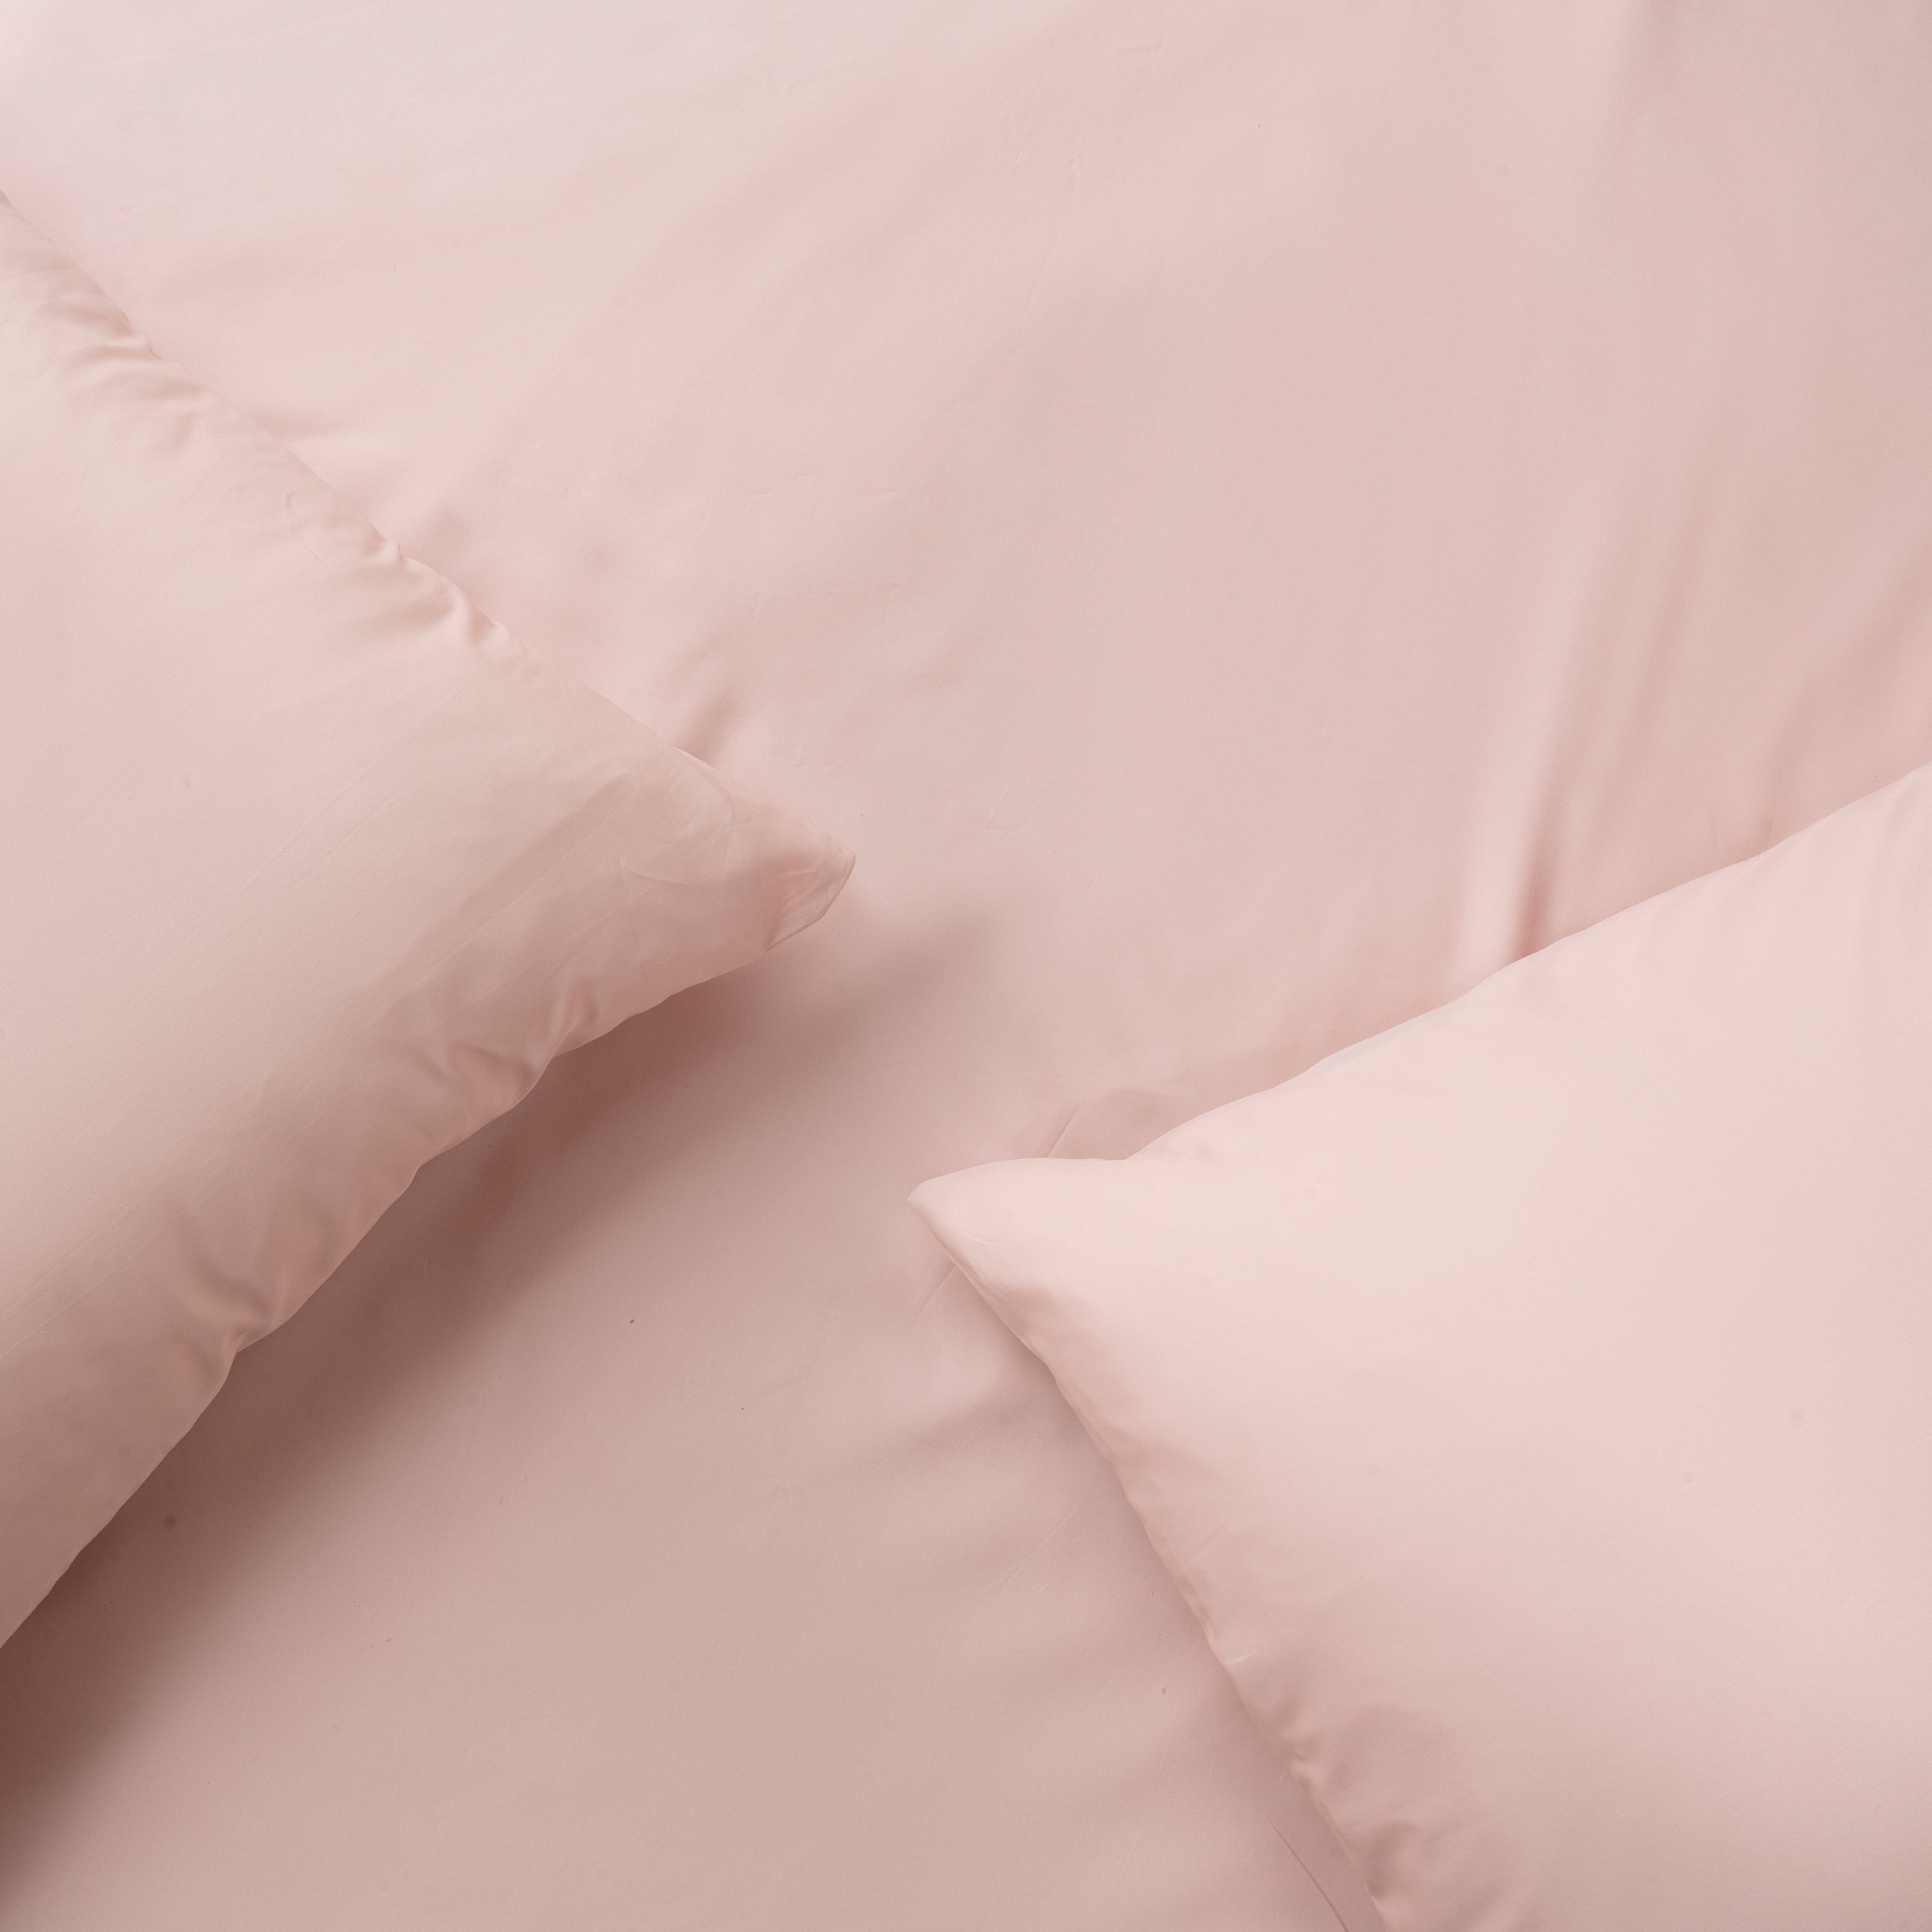 Egyptian Cotton Pillowcases, Bedding